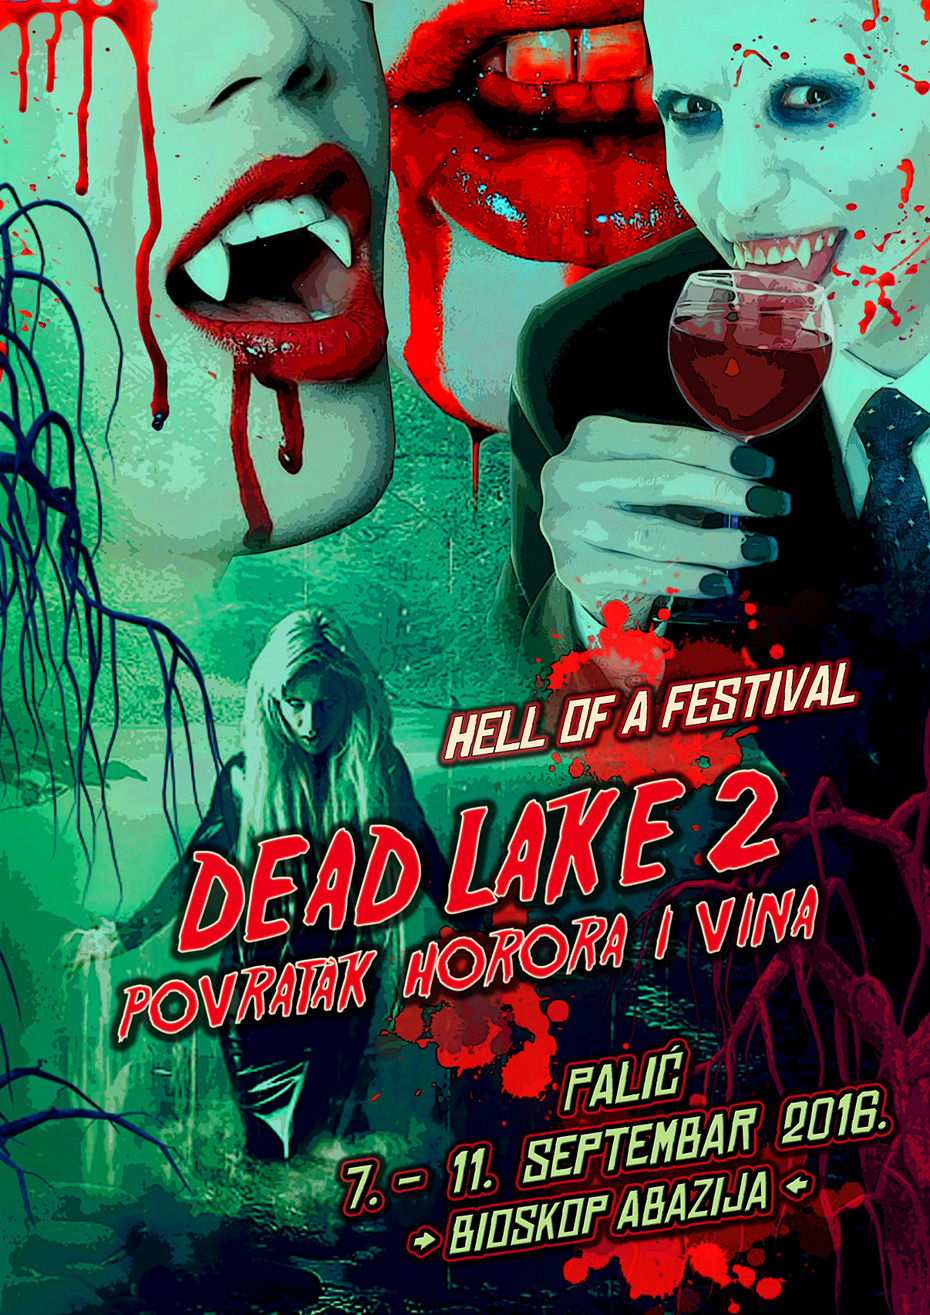 Povratak-horora-i-vina-–-Drugi-Dead-Lake-Horror-&-Wine-Festival